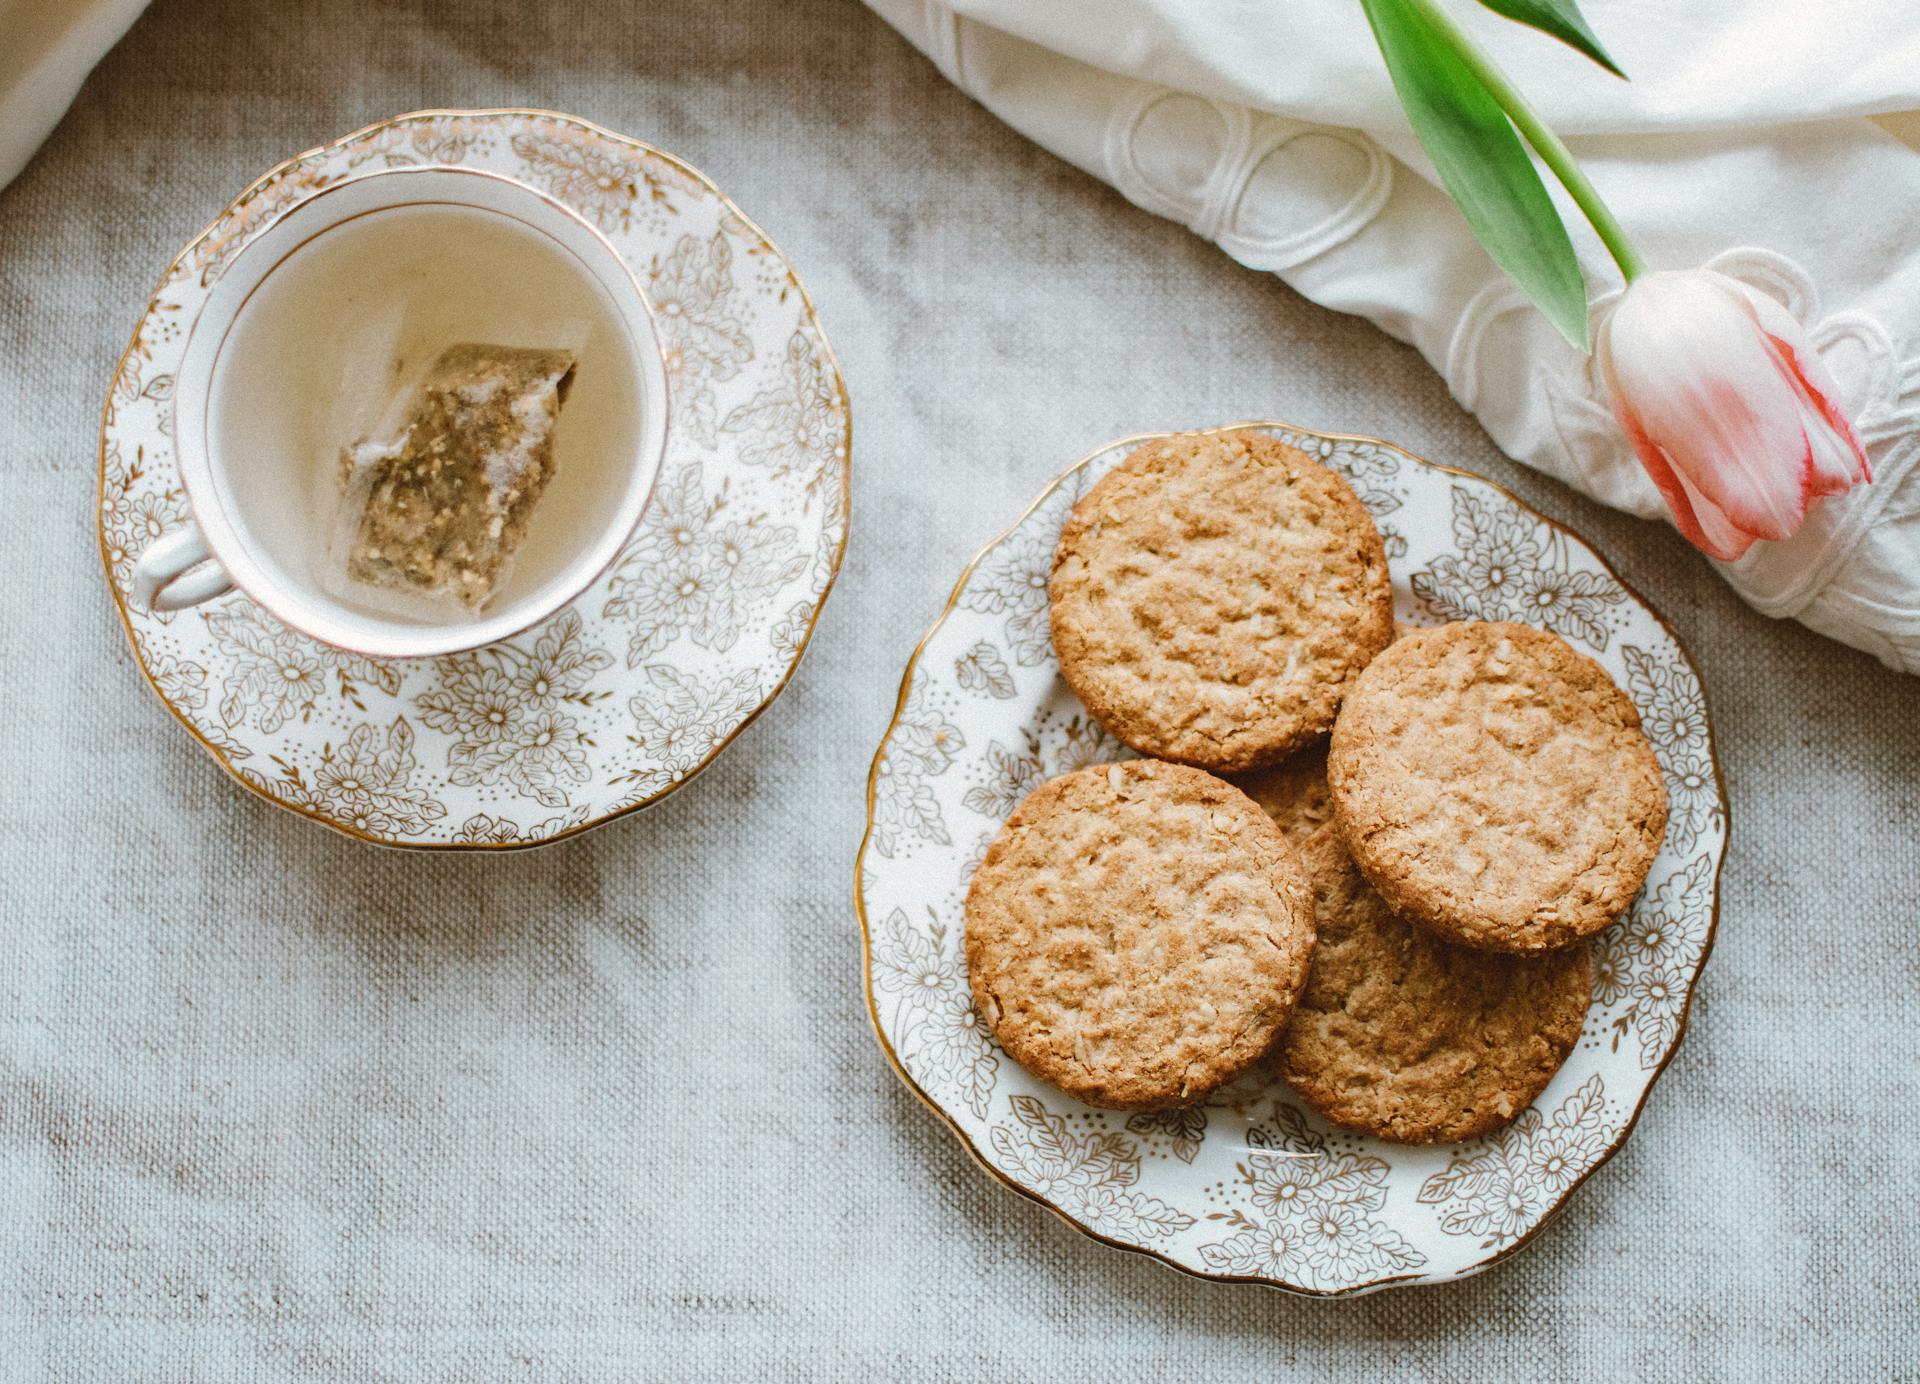 Thé et biscuits | Source : Pexels